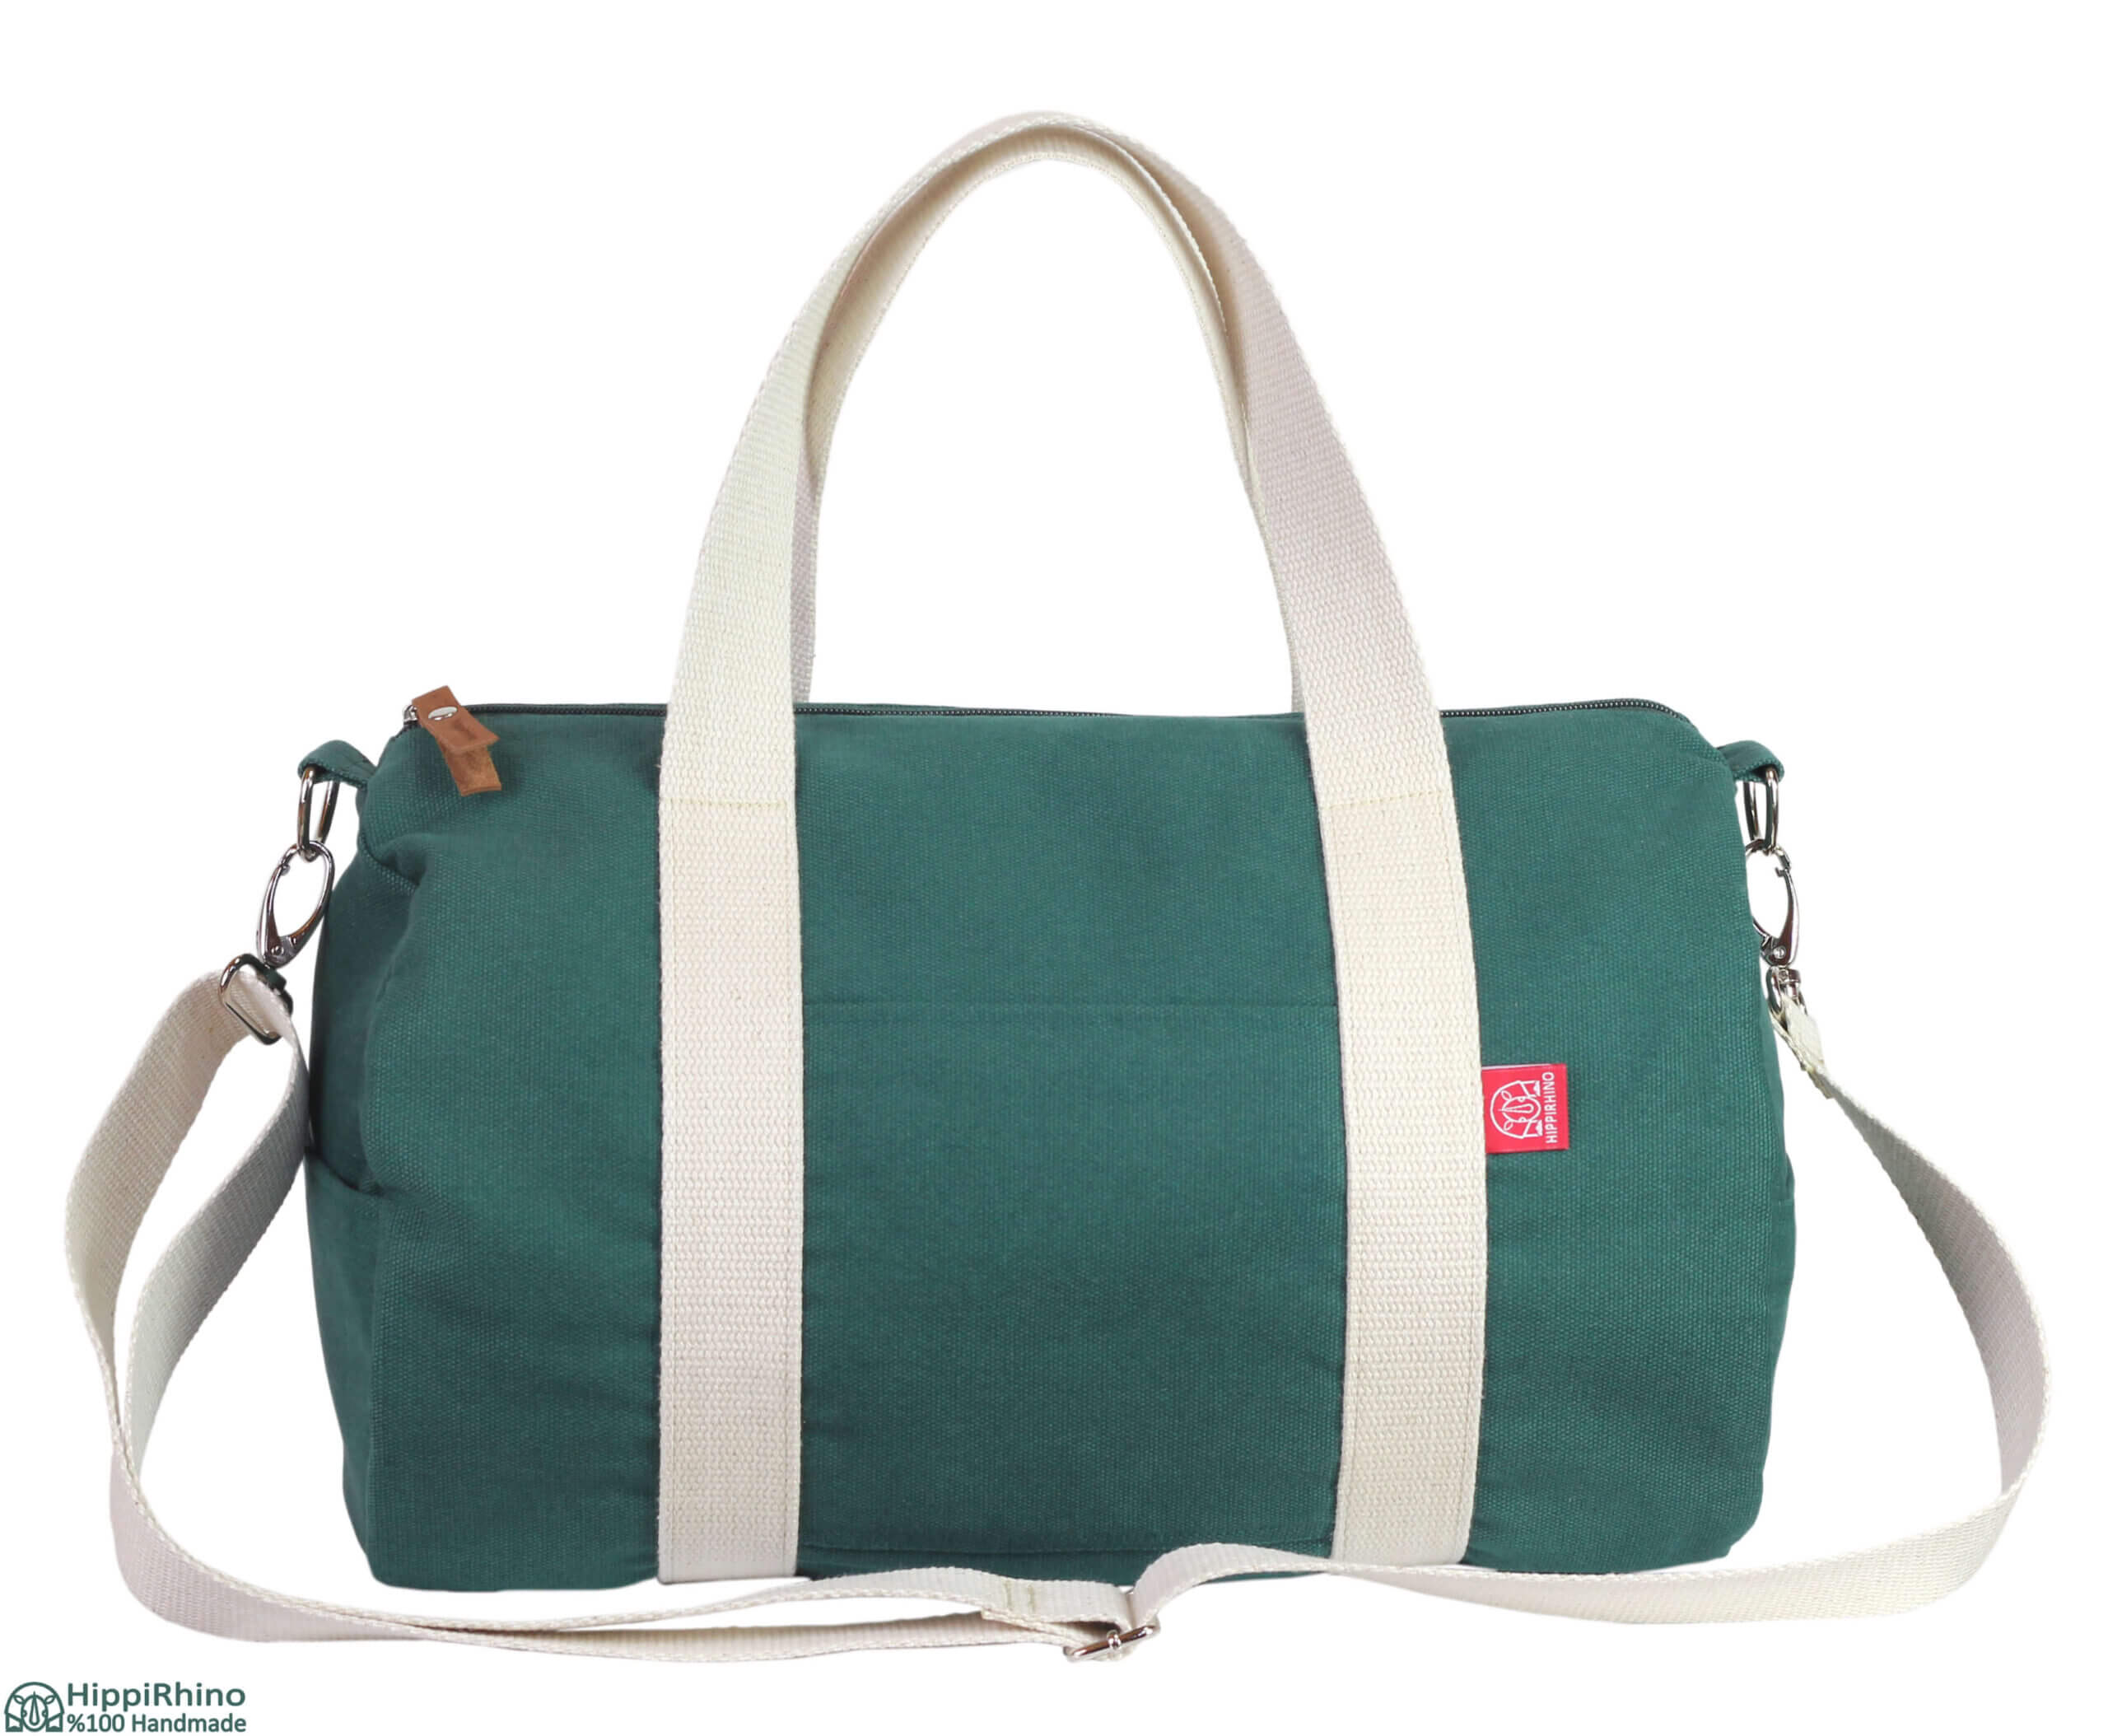 Travel Hand Luggage Duffle Bag Gym Sports Bag Shoulder Bag Overnight Weekend Bag